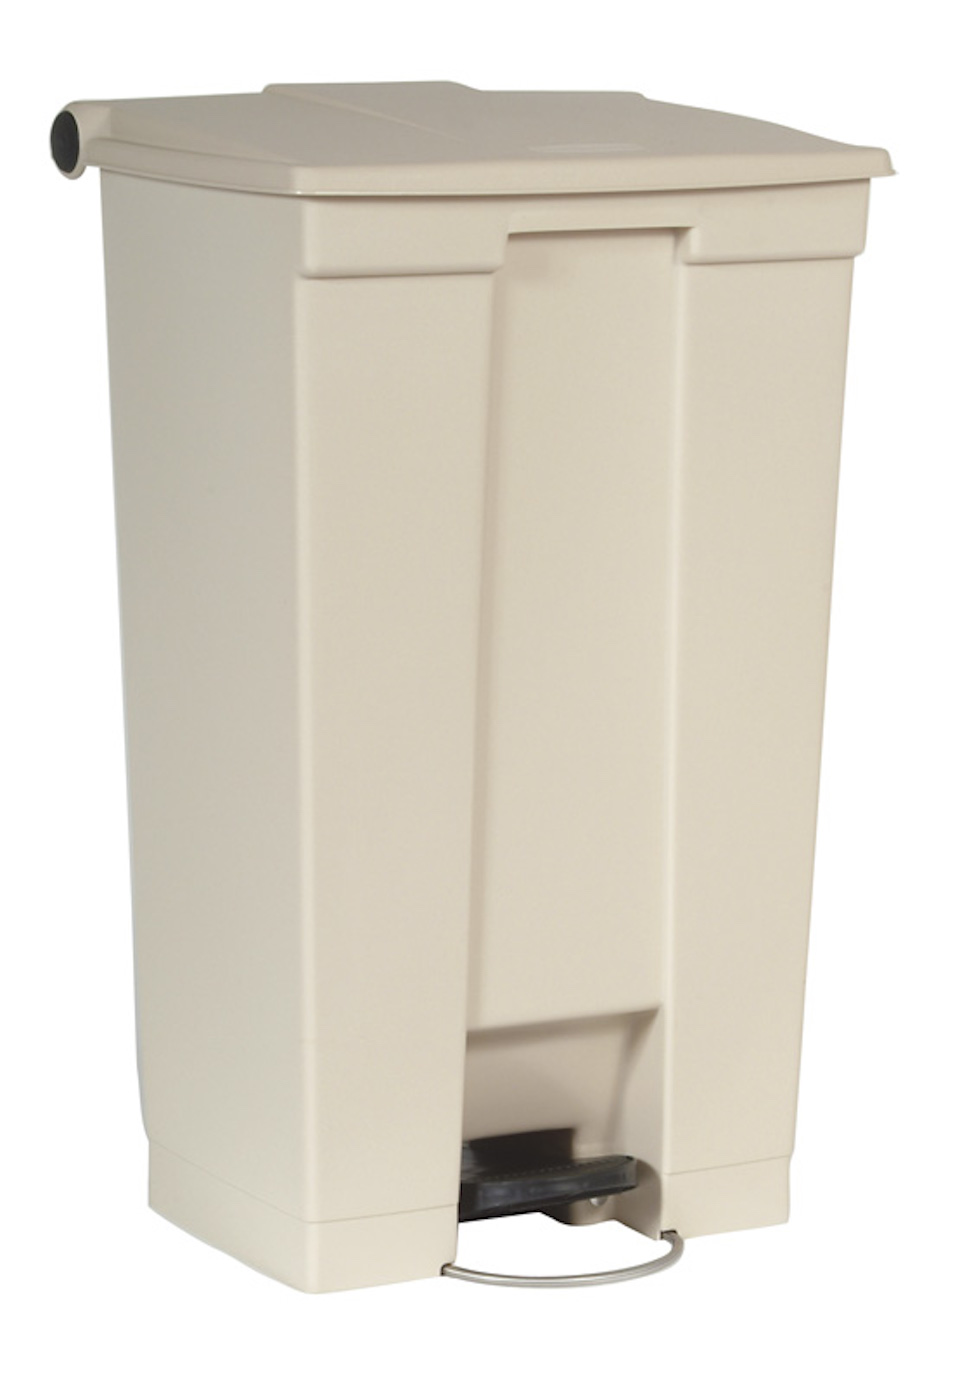 Rubbermaid Robuster Pedaleimer | 87 Liter, HxBxT 82,6x41x50,2cm | Aus HACCP konformen Polyethylen | Beige